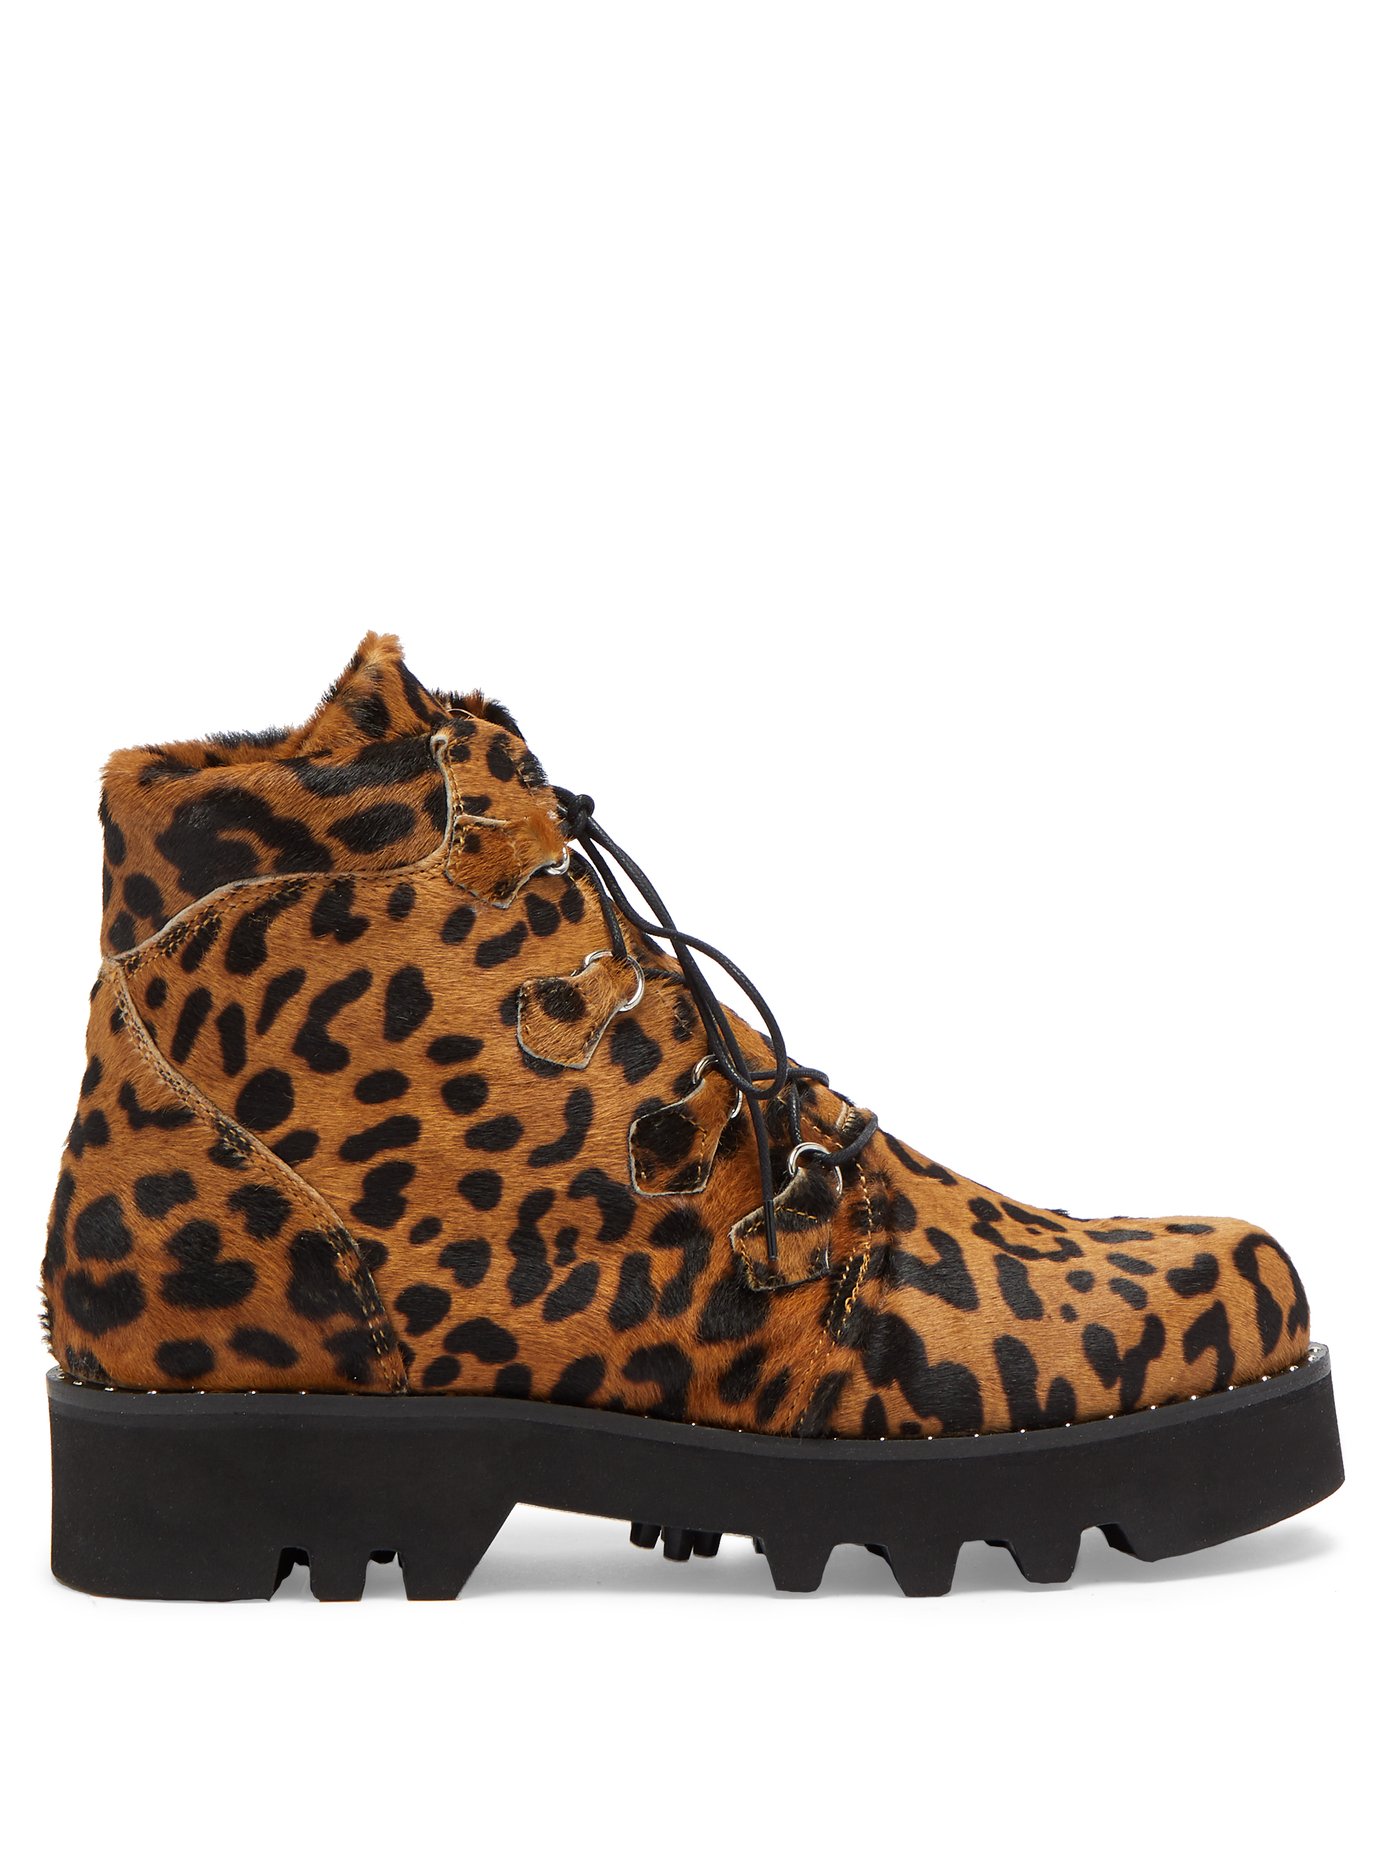 tabitha simmons leopard boots